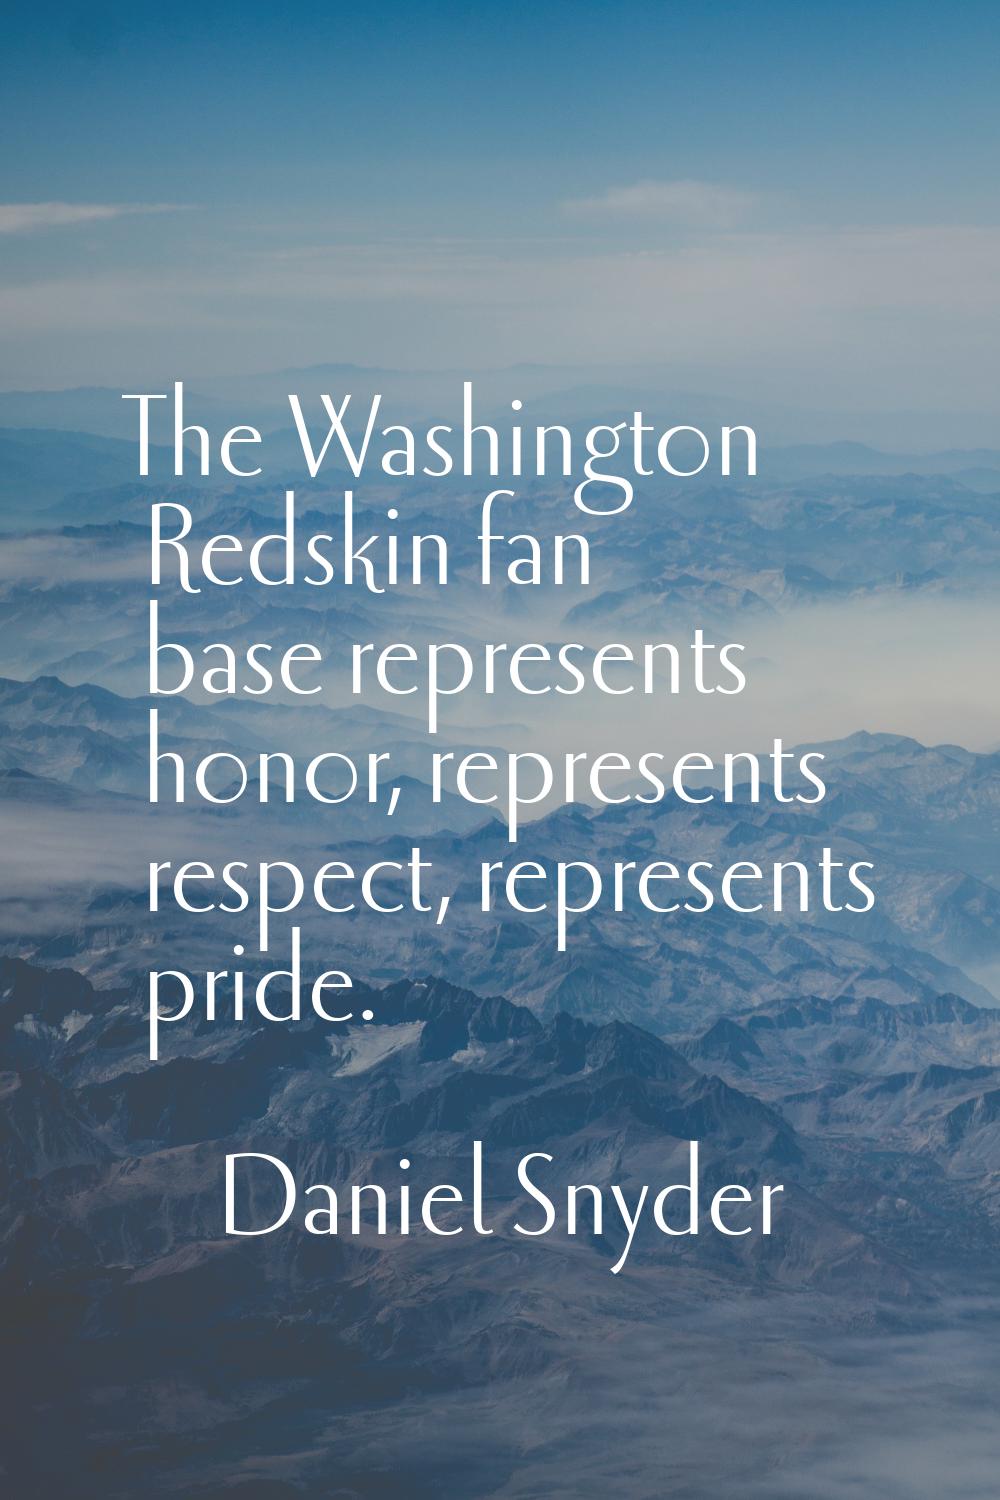 The Washington Redskin fan base represents honor, represents respect, represents pride.